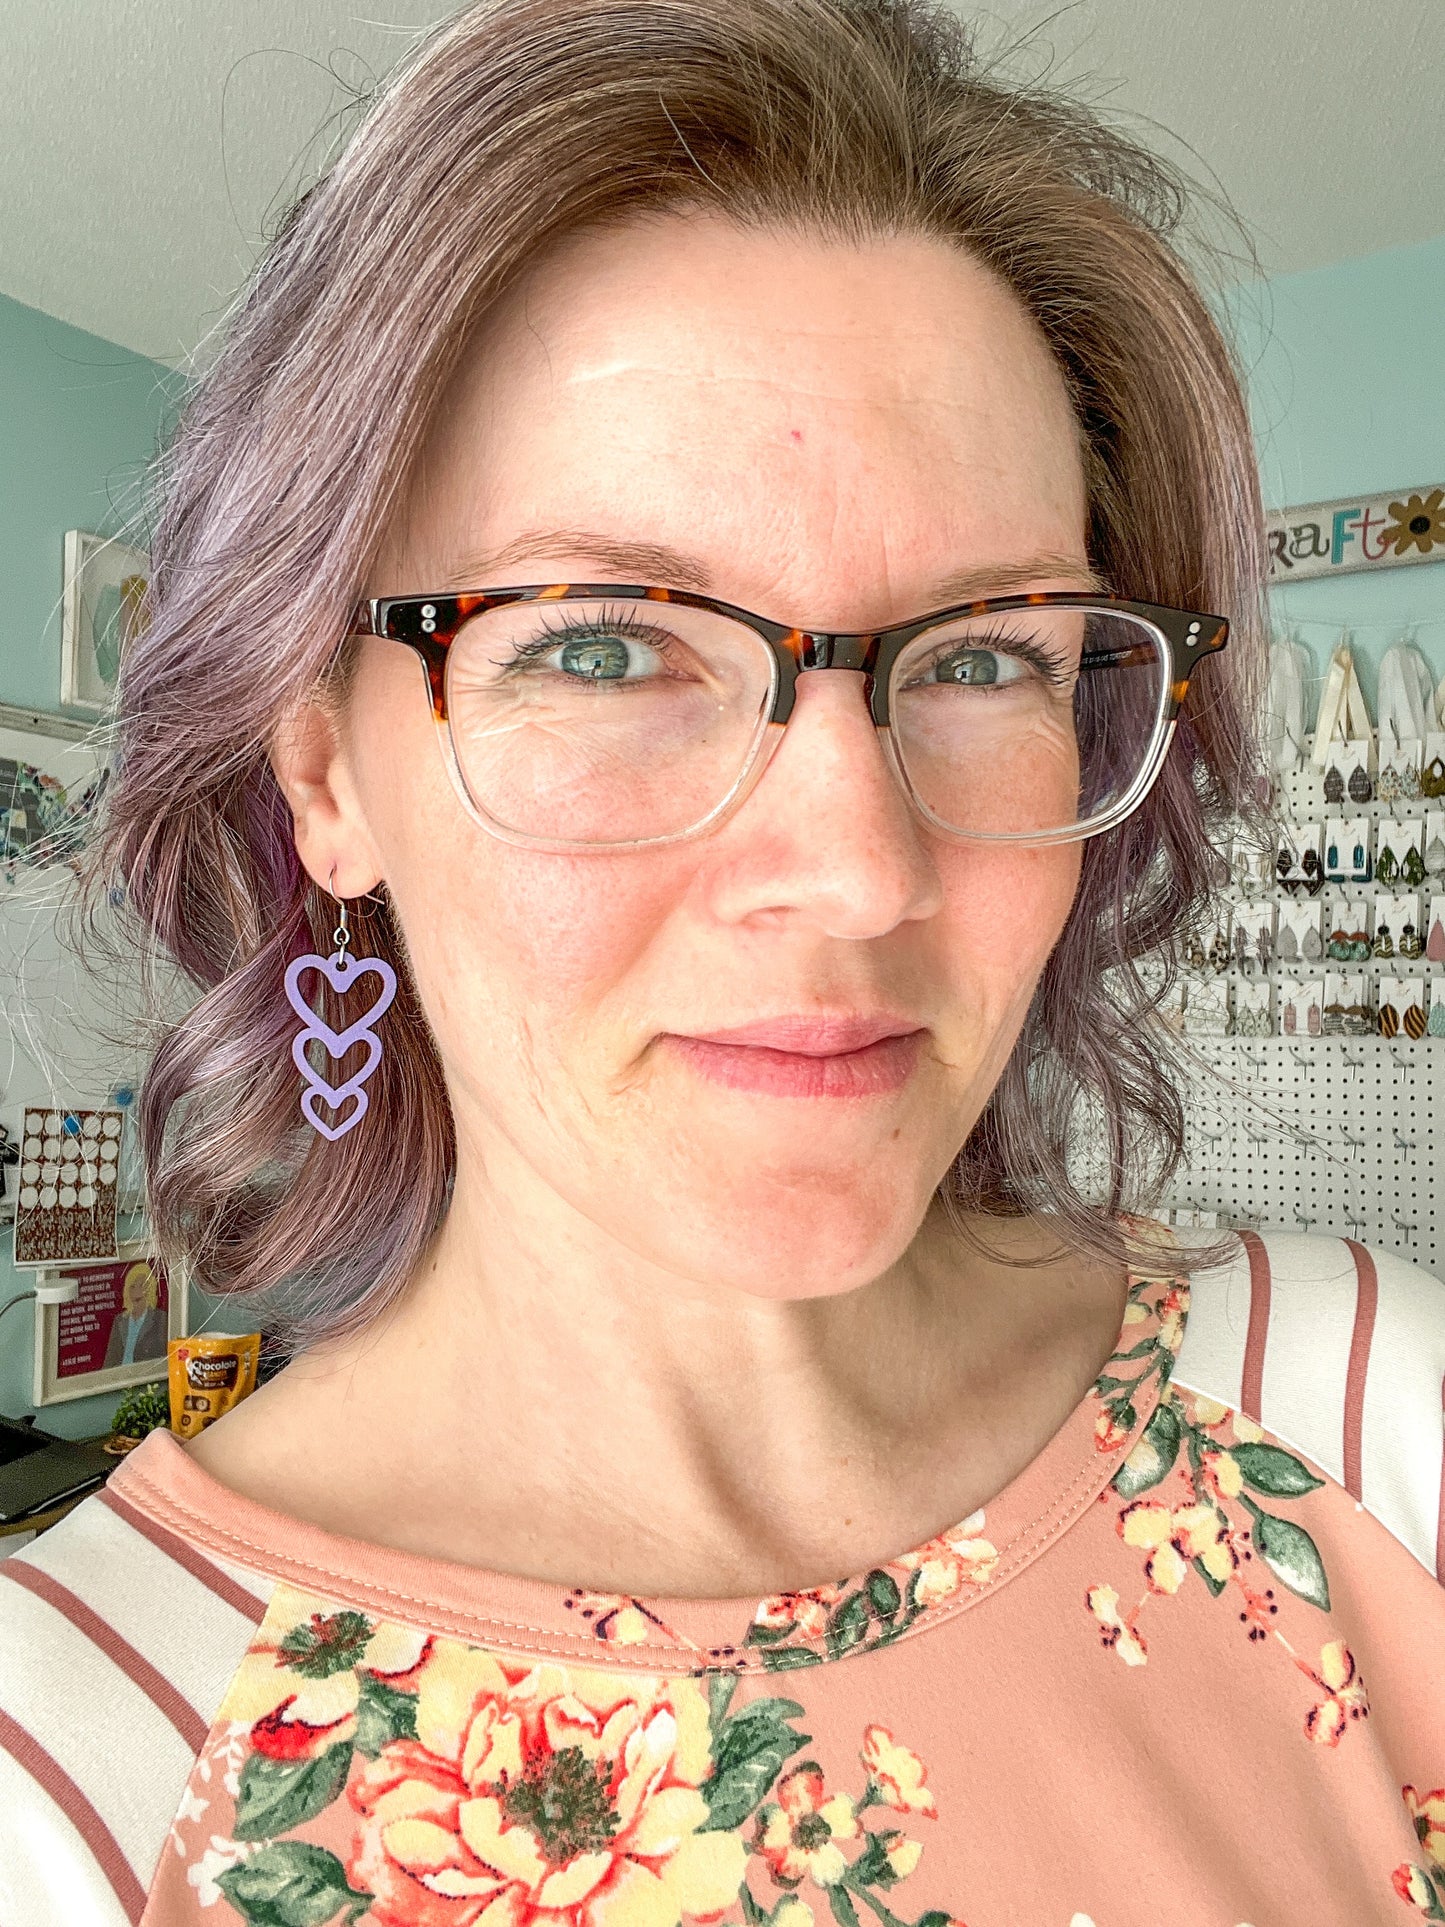 Purple Stacked Heart Wood Earrings: Choose From 3 Designs